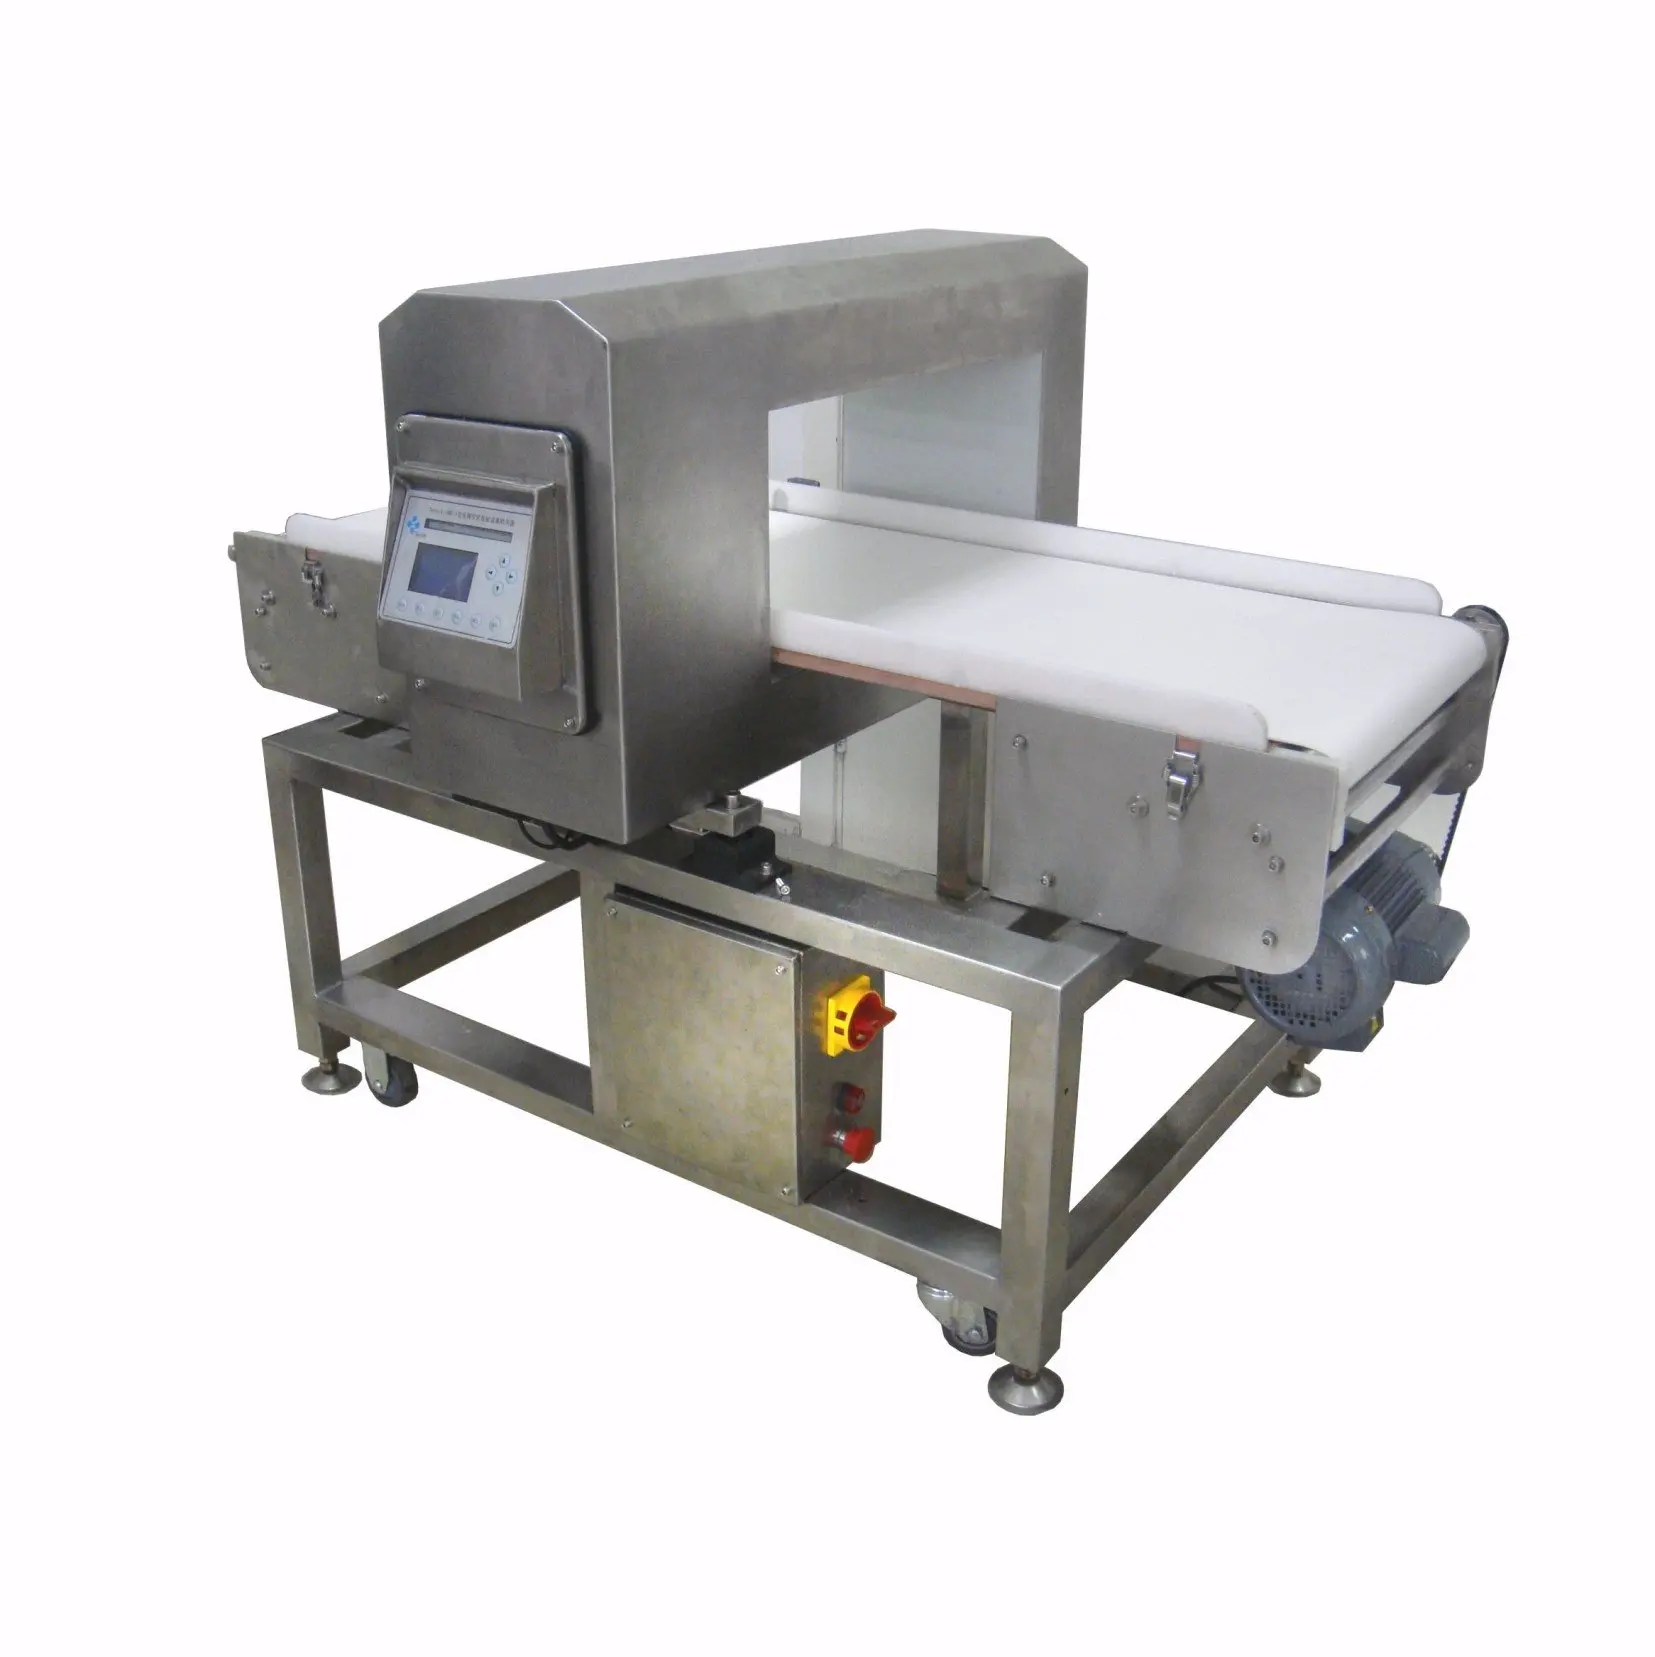 High sensitivity and stability, conveyor belt metal detectors in food industry